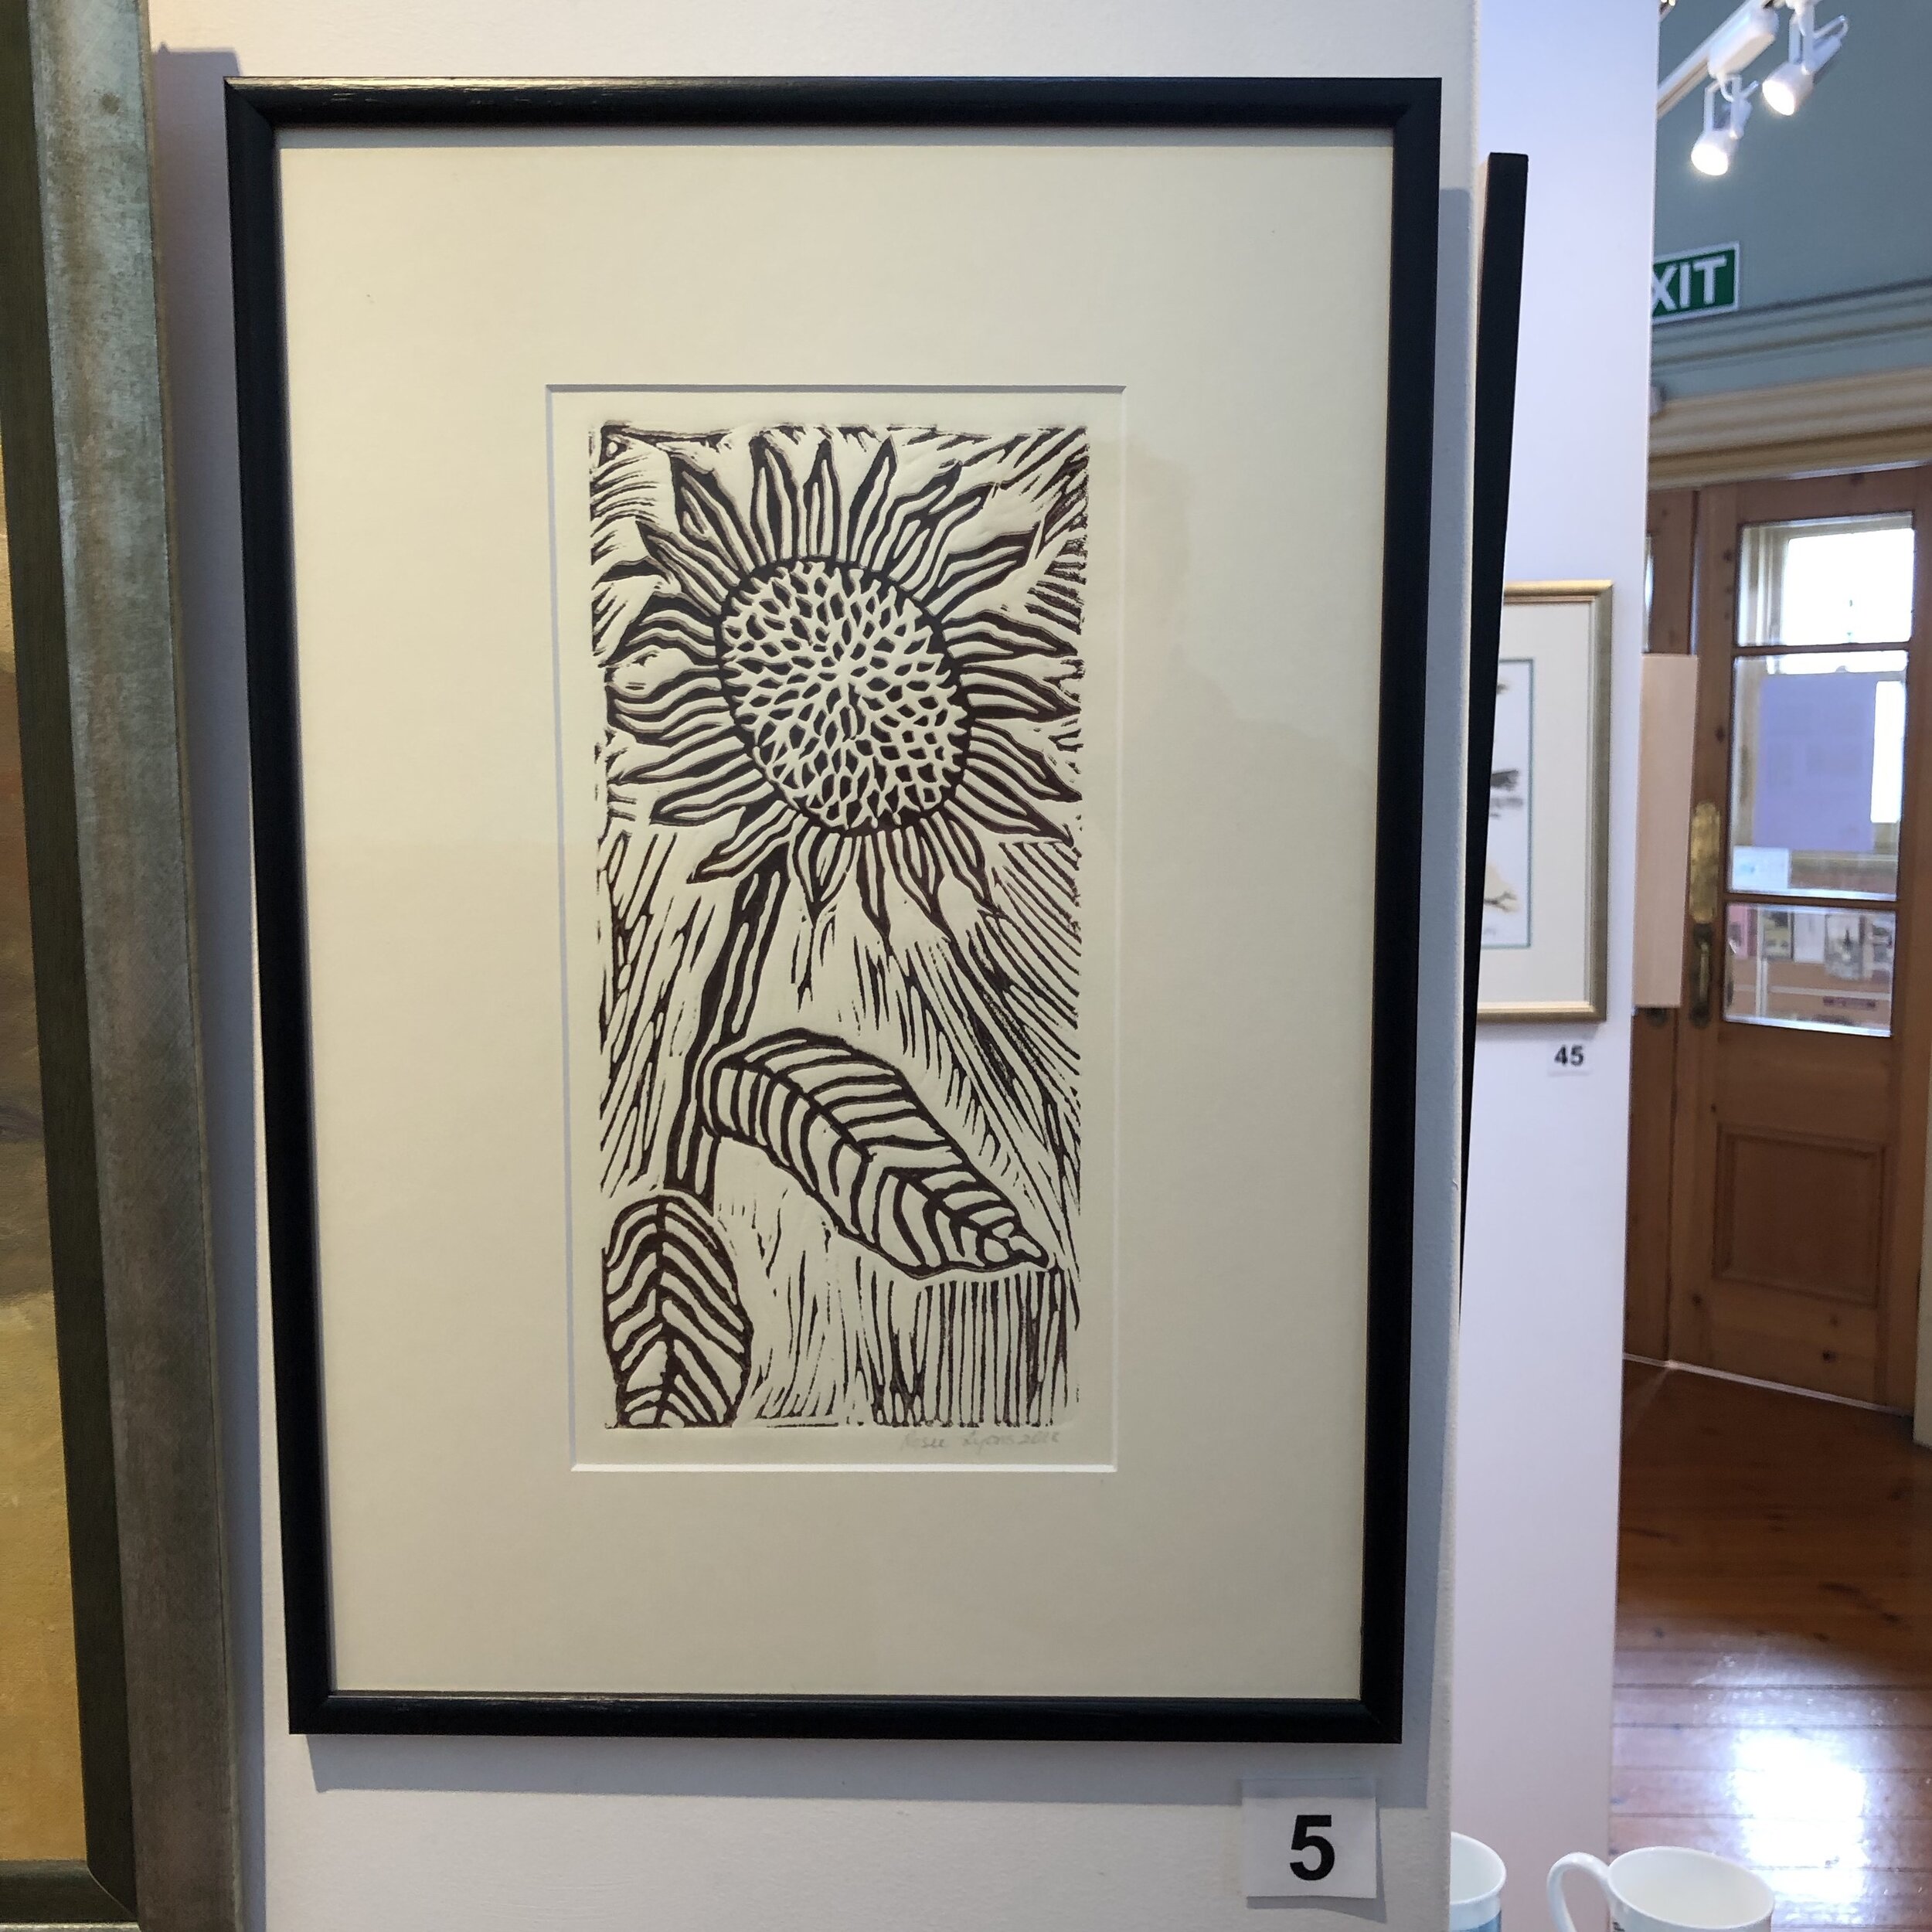 "Sunflower" by Rosie Lyons